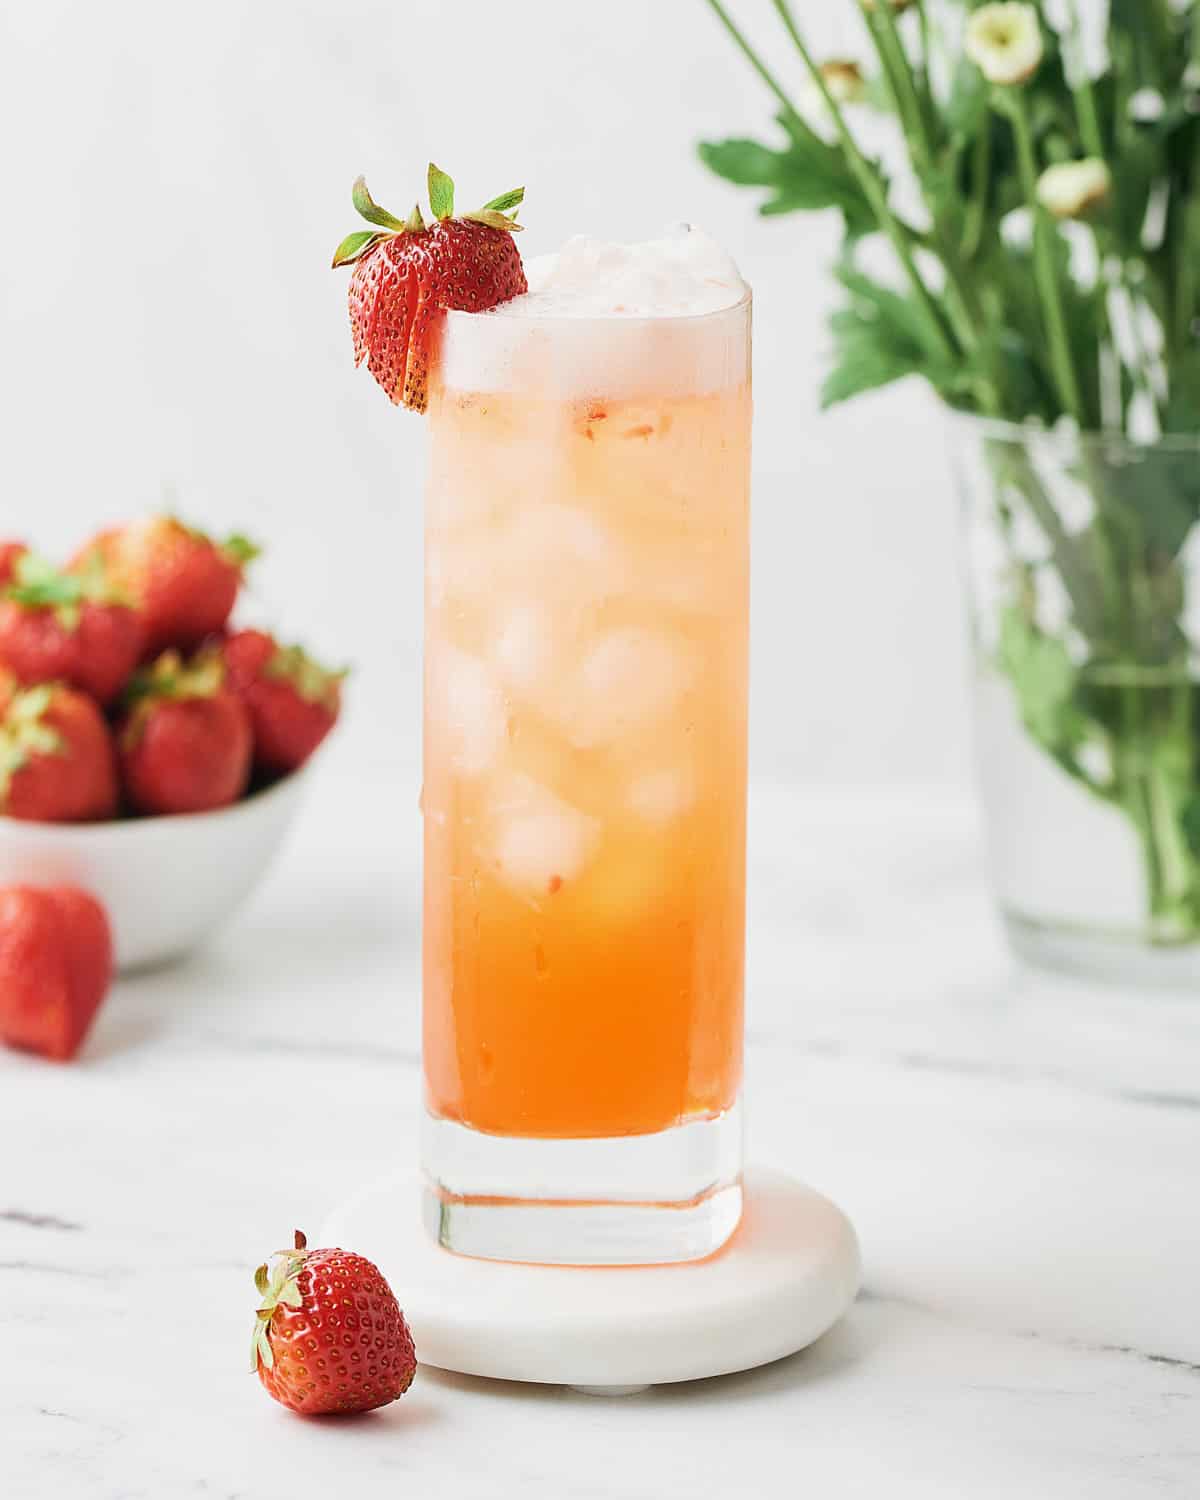 Glass of Strawberry Elderflower Gin Fizz in tall glass with strawberry garnish.